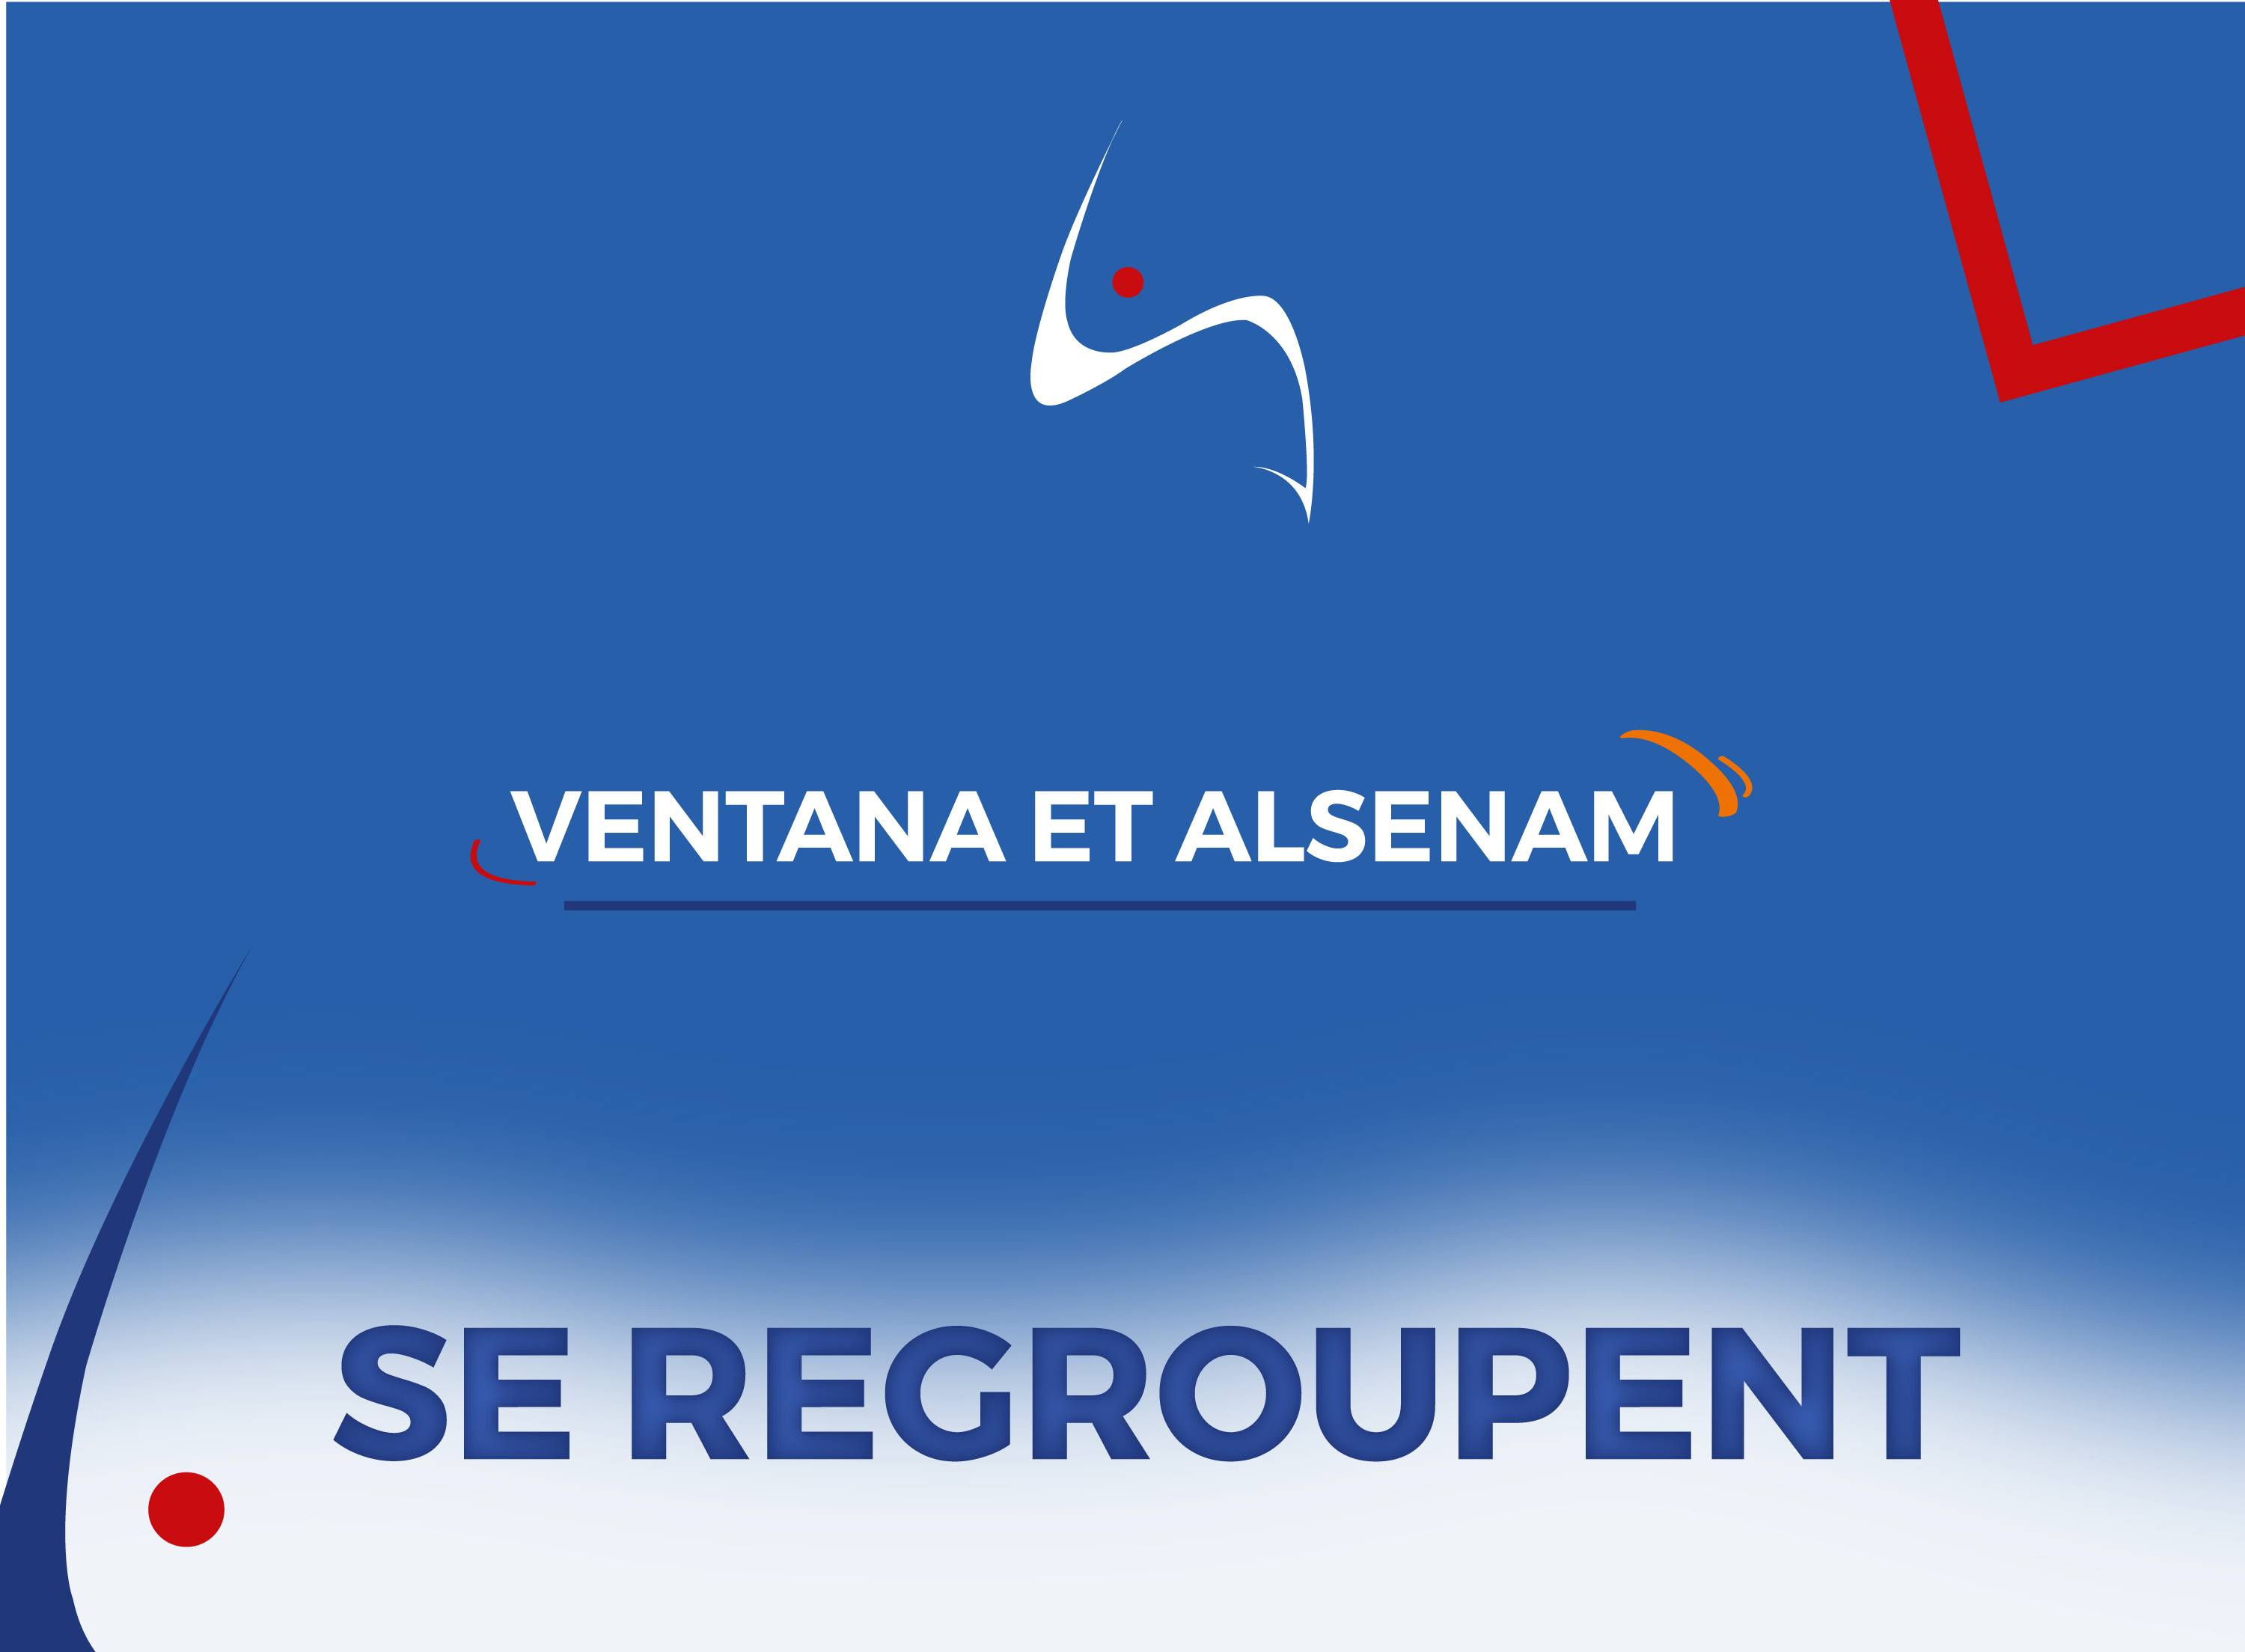 Alsenam joins Ventana group